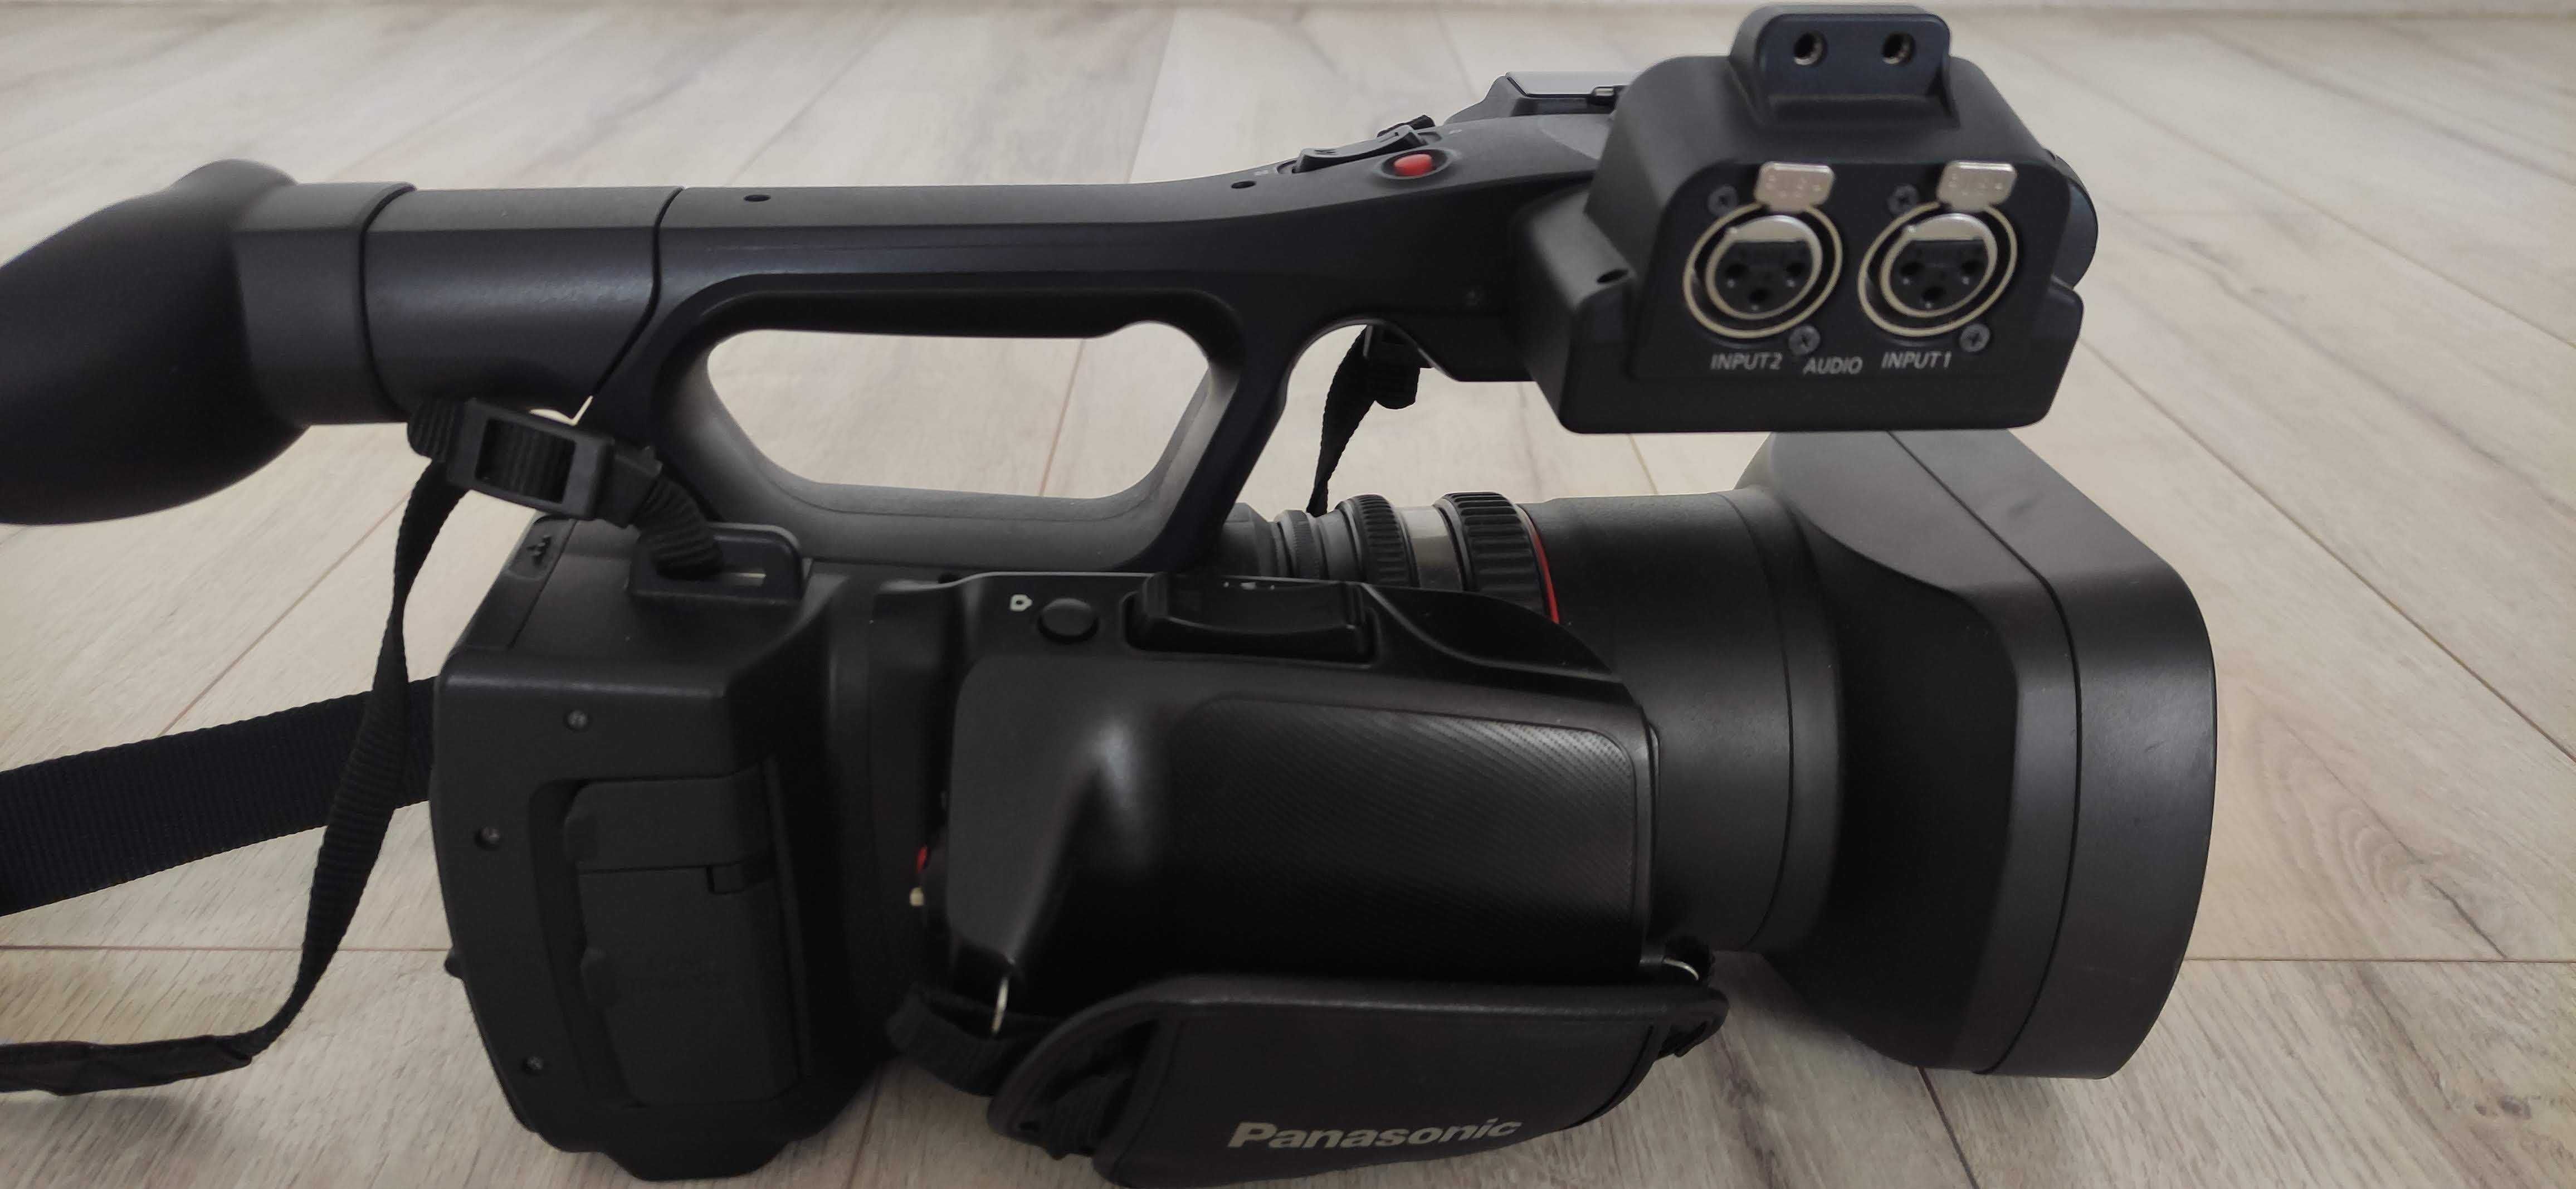 kamera Panasonic AG-AC90